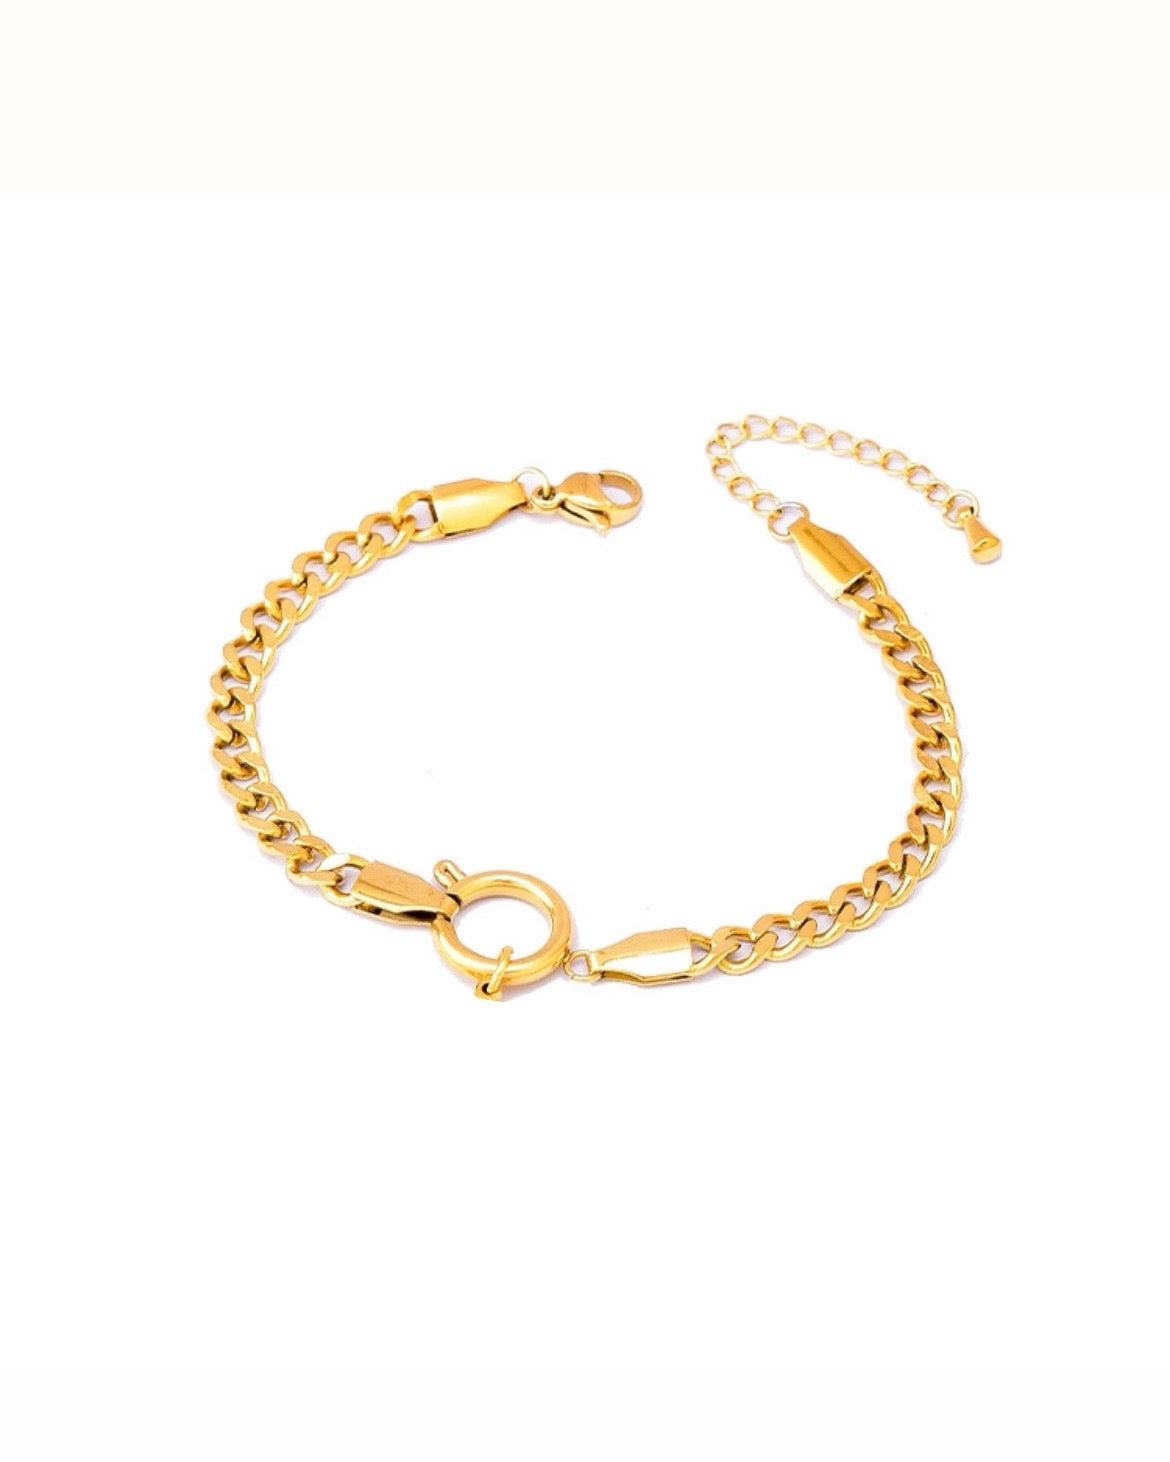 GoldenLink Bracelet